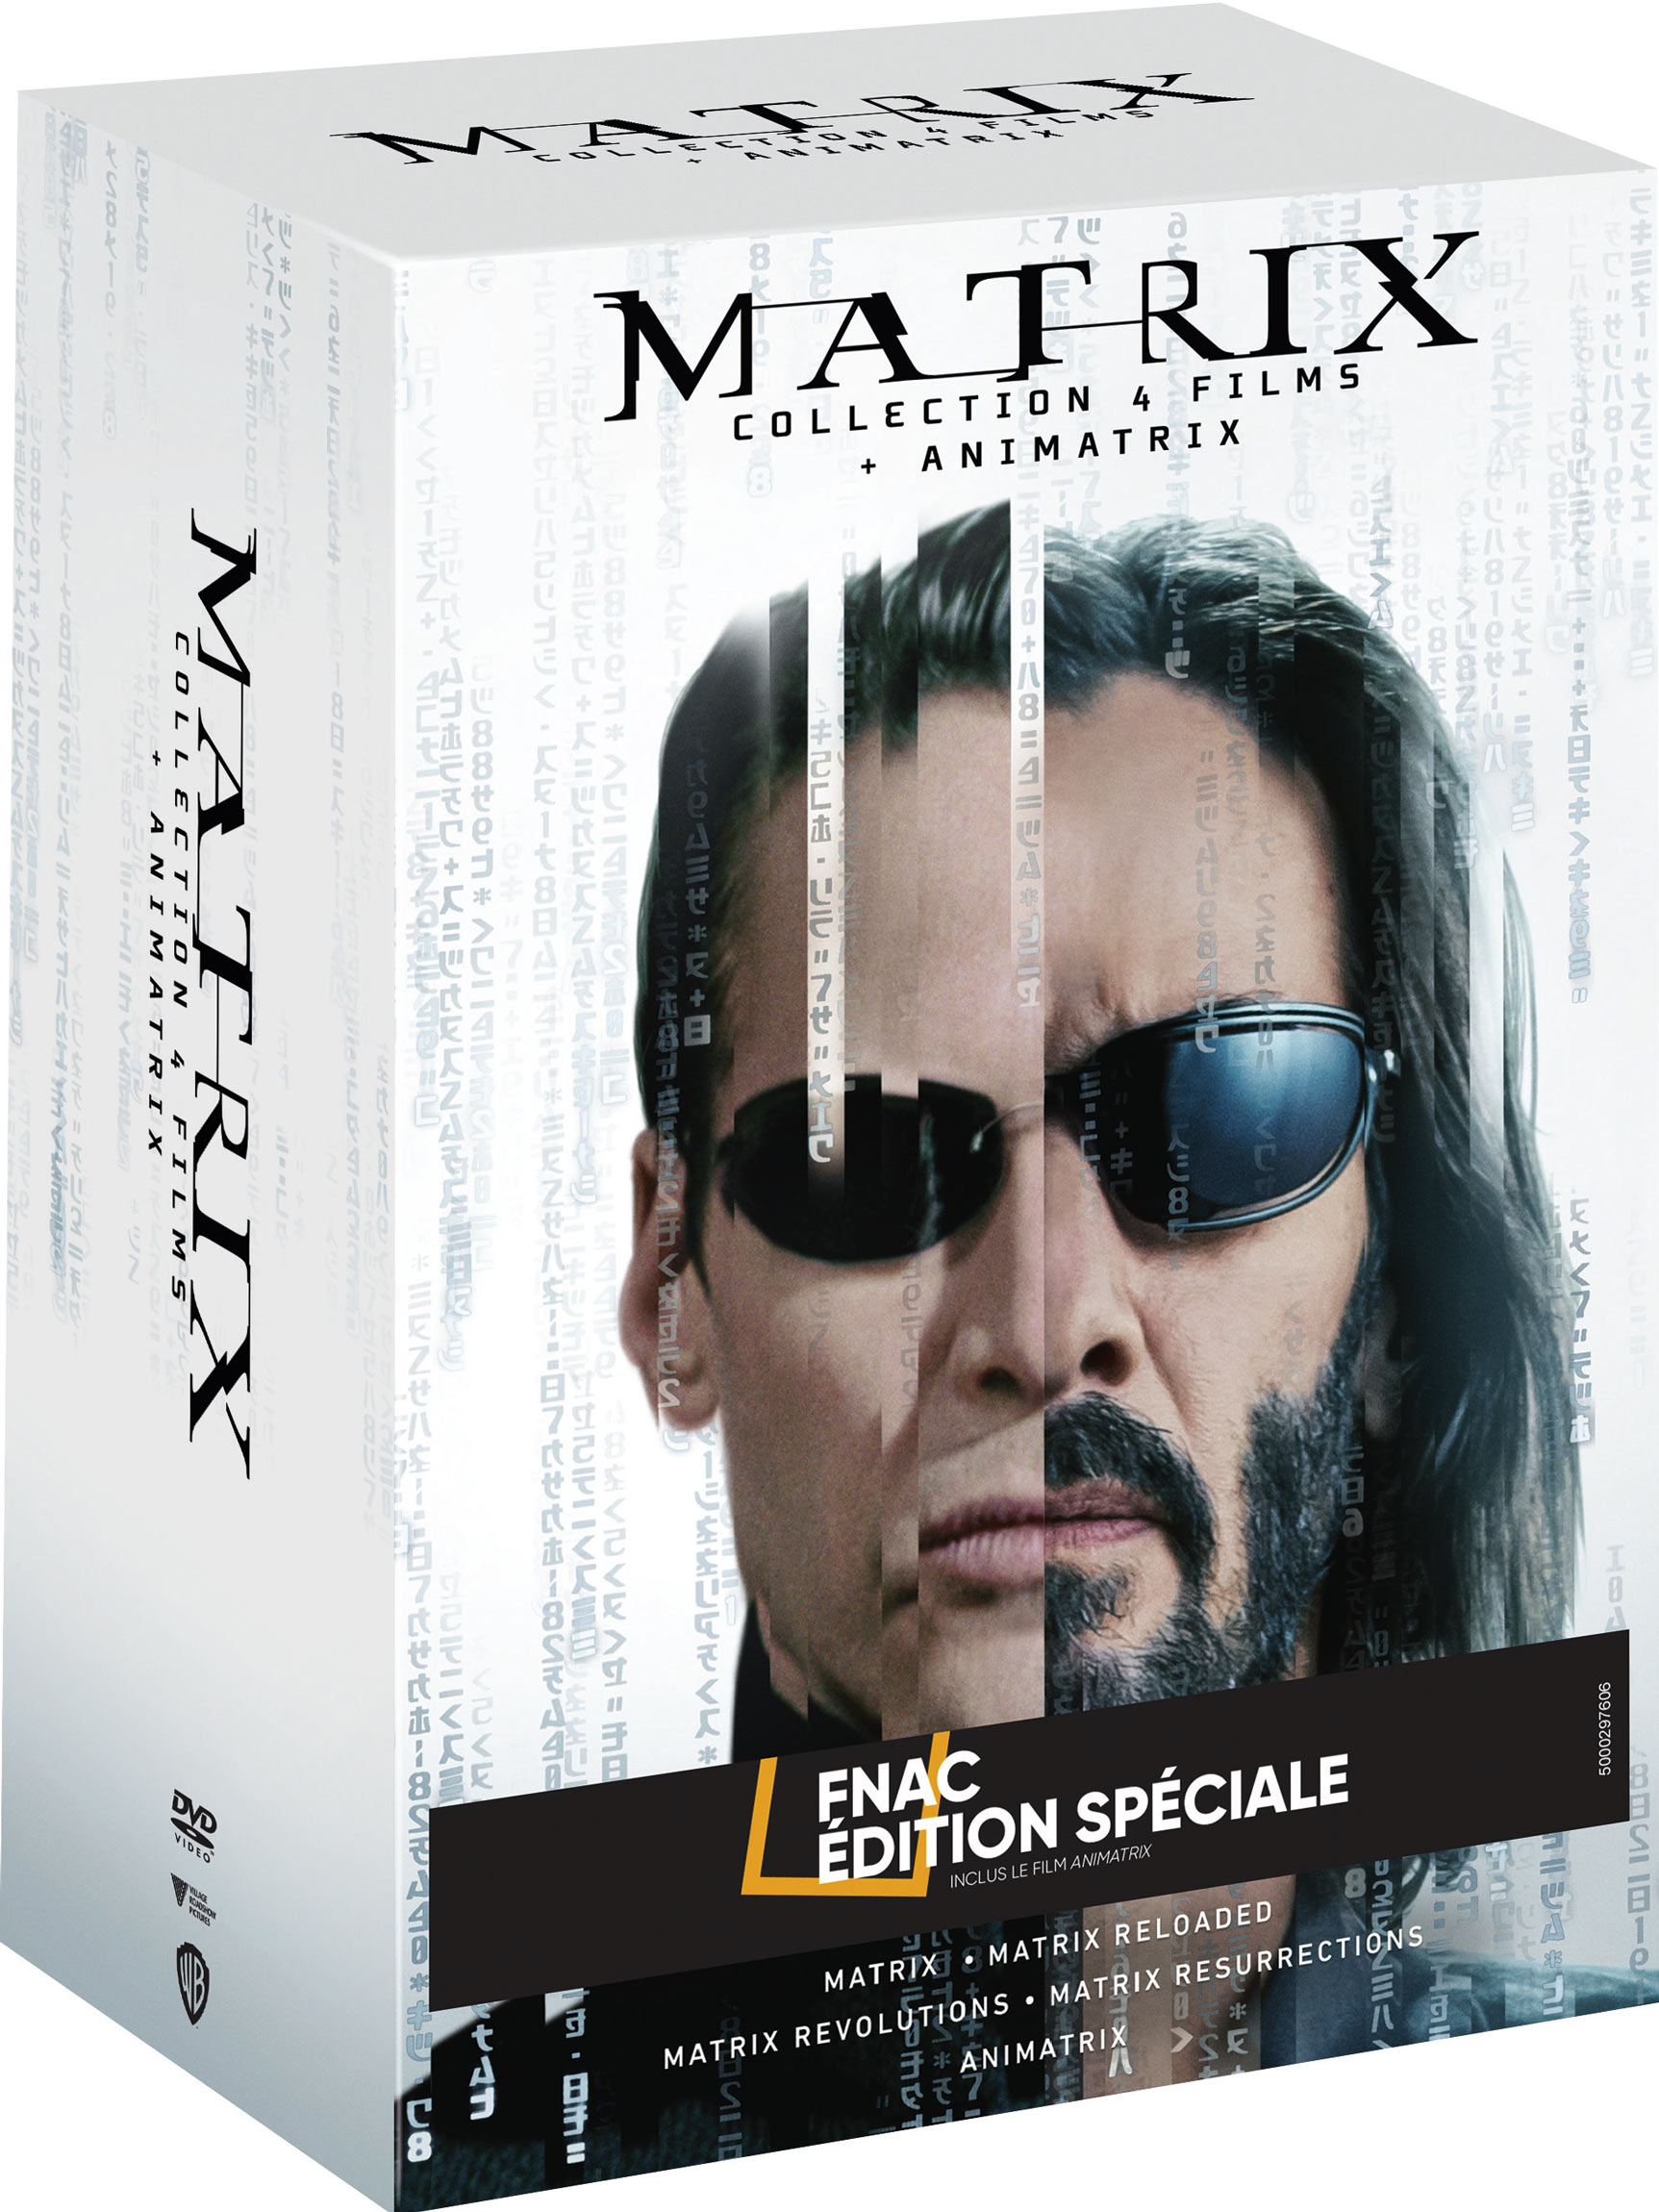 Matrix - Collection 4 films + Animatrix - DVD